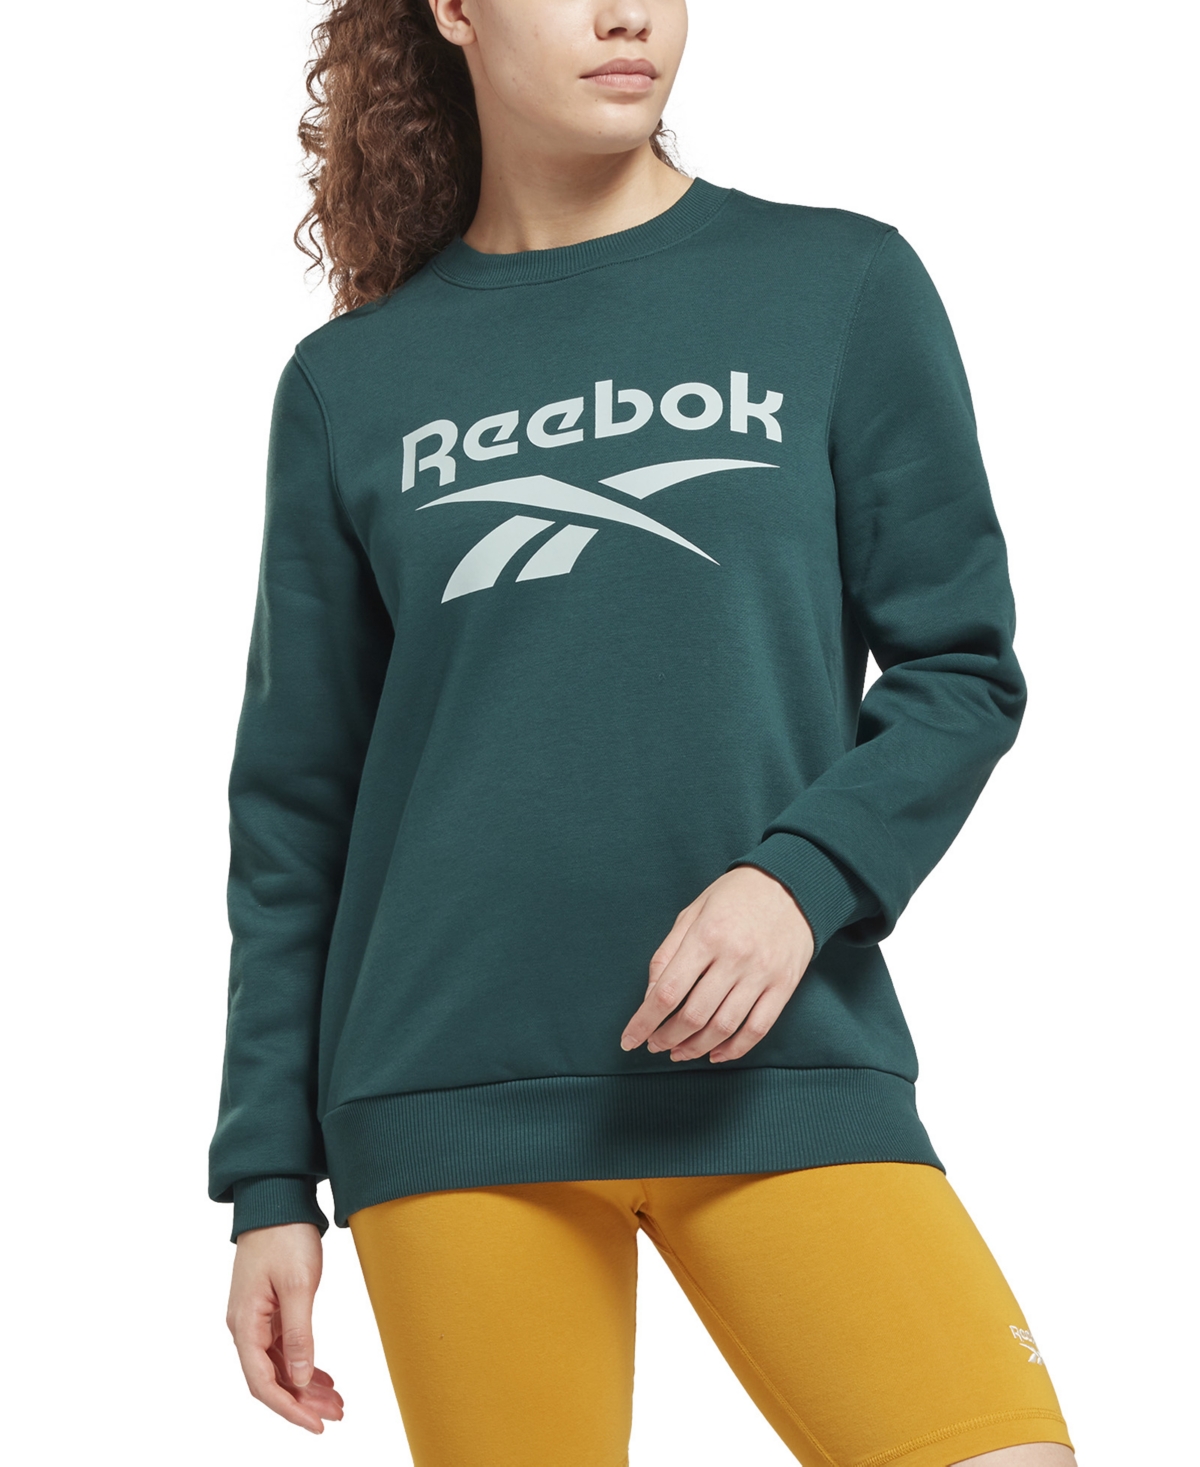  Reebok Women's French Terry Sweatshirt